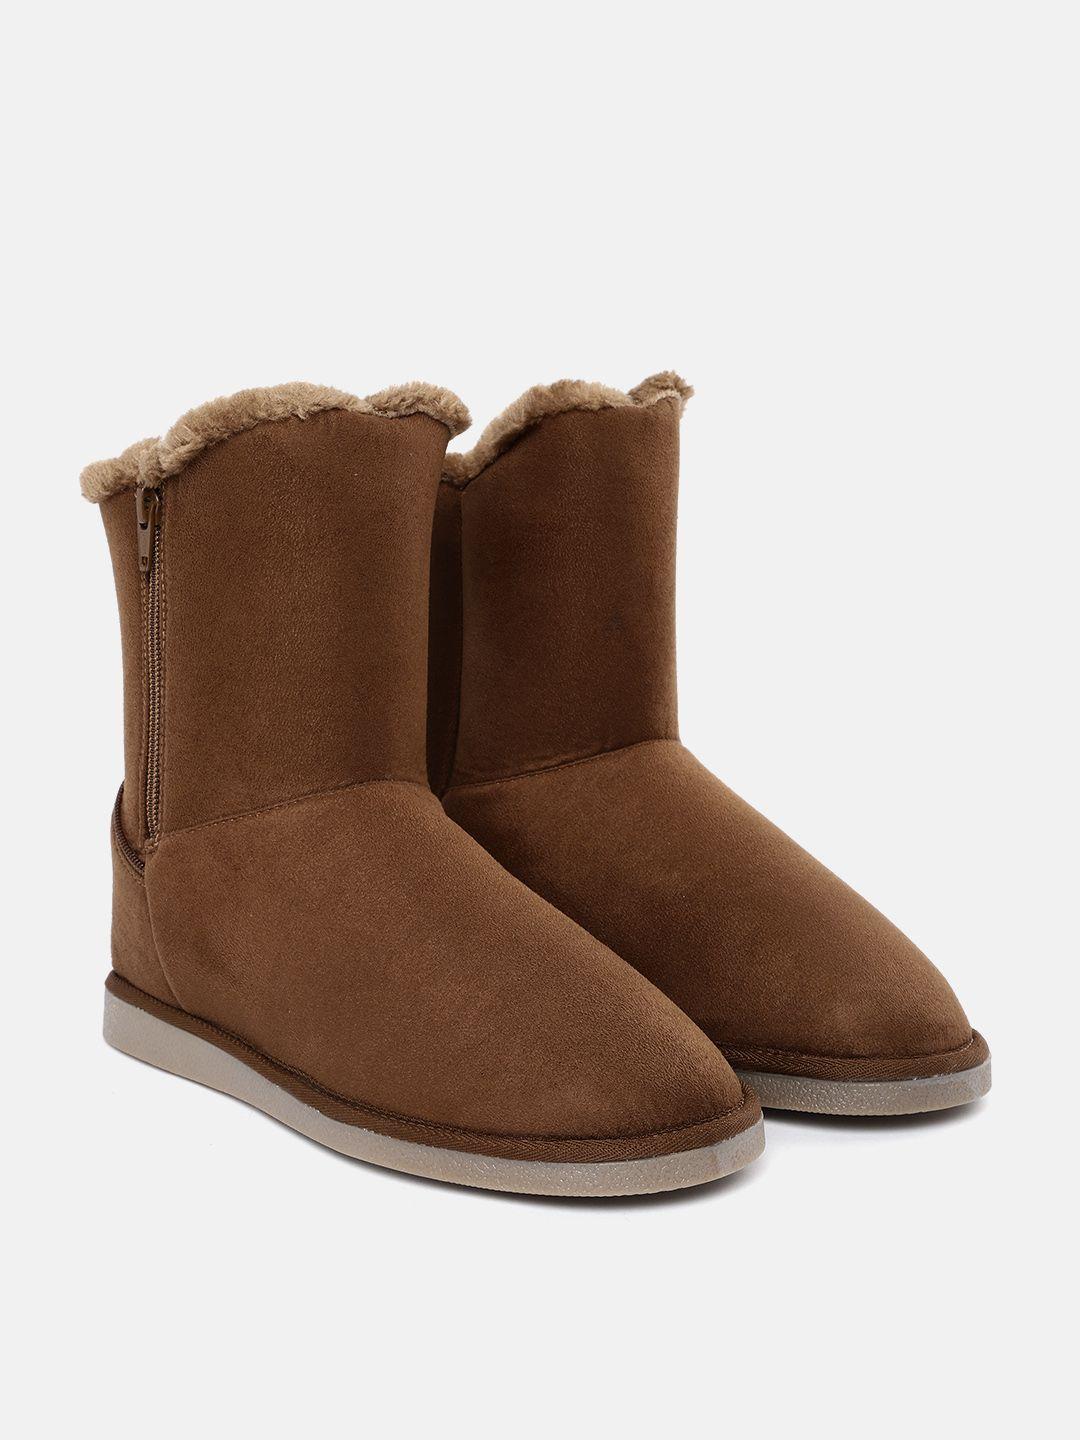 carlton-london-women-flat-winter-boots-with-faux-fur-trim-detail